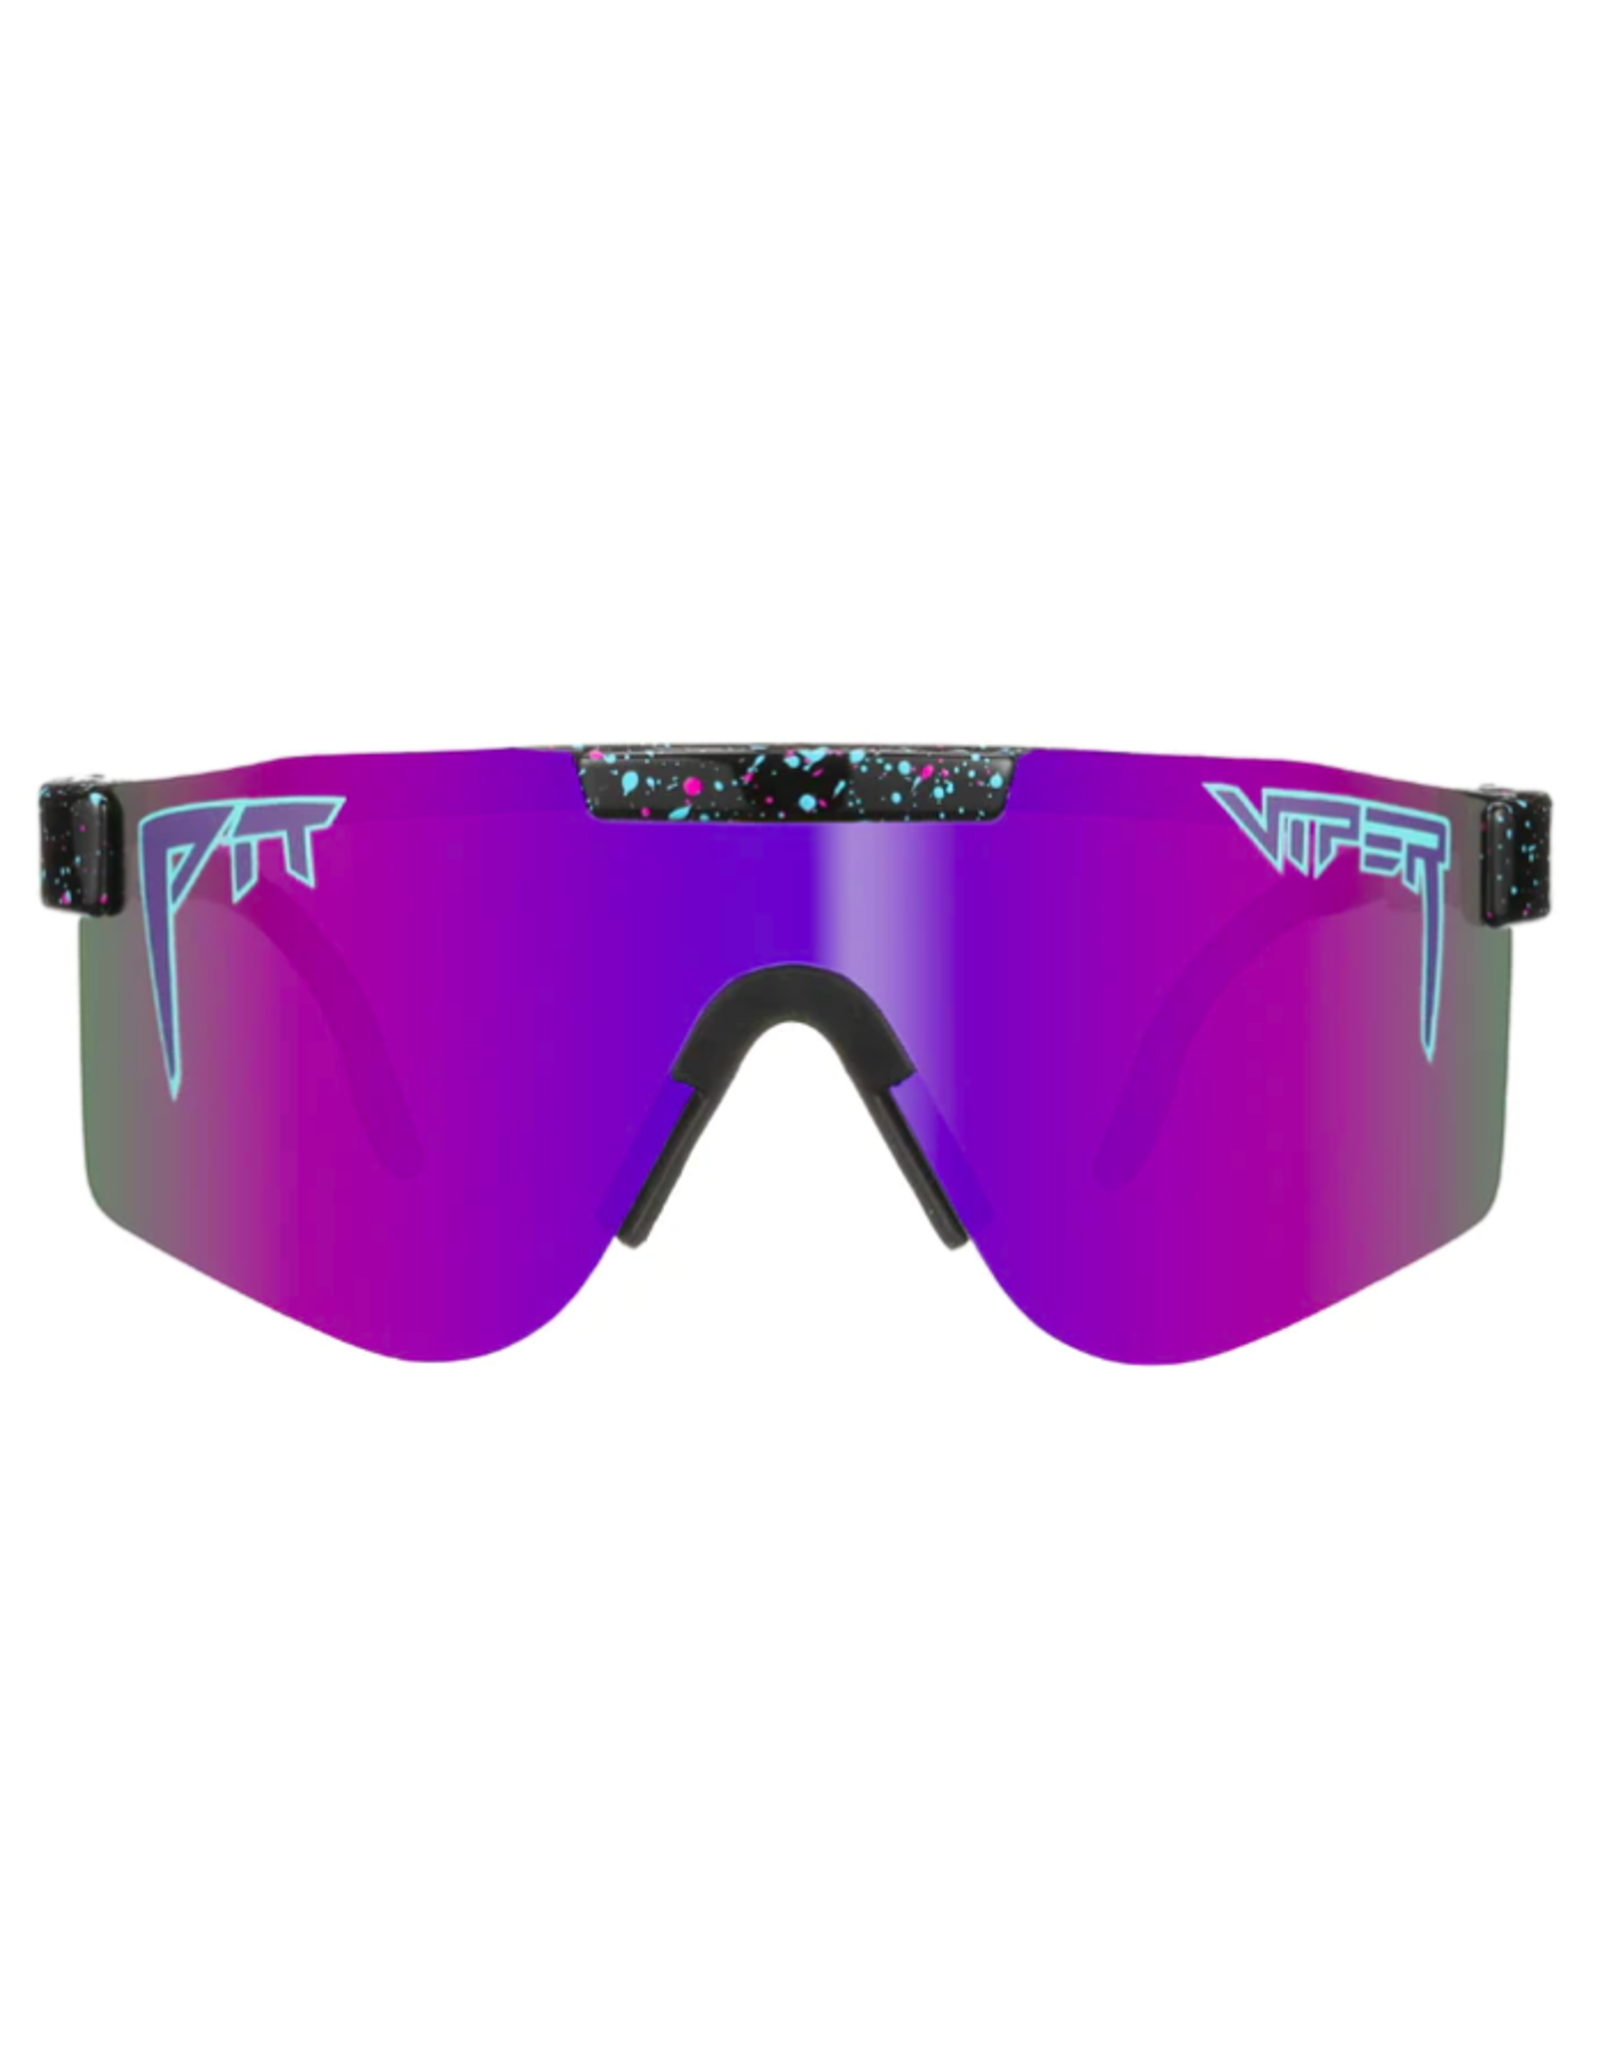 PIT VIPER Pit Viper The Night Fall Polarized Double Wide Sunglasses